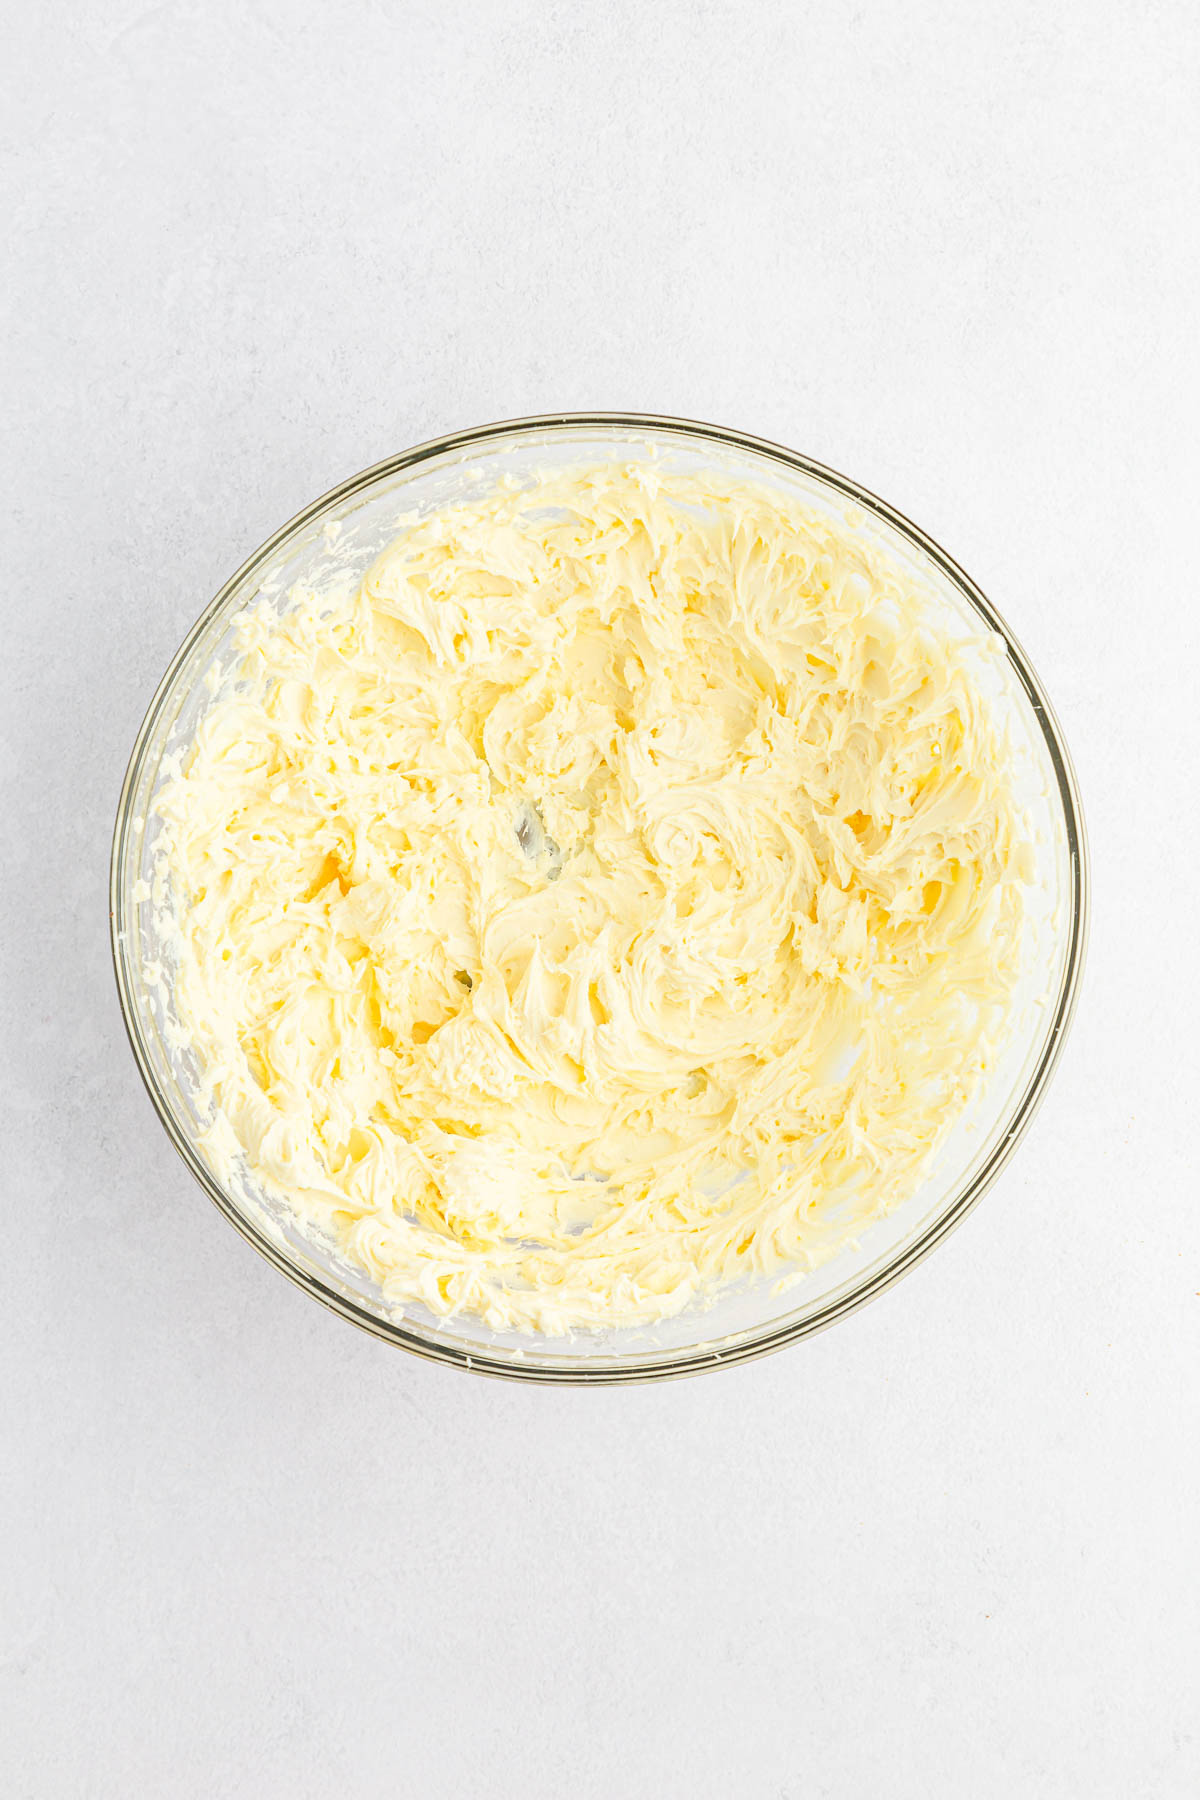 Cream cheese, powdered sugar and vanilla mixed in glass bowl